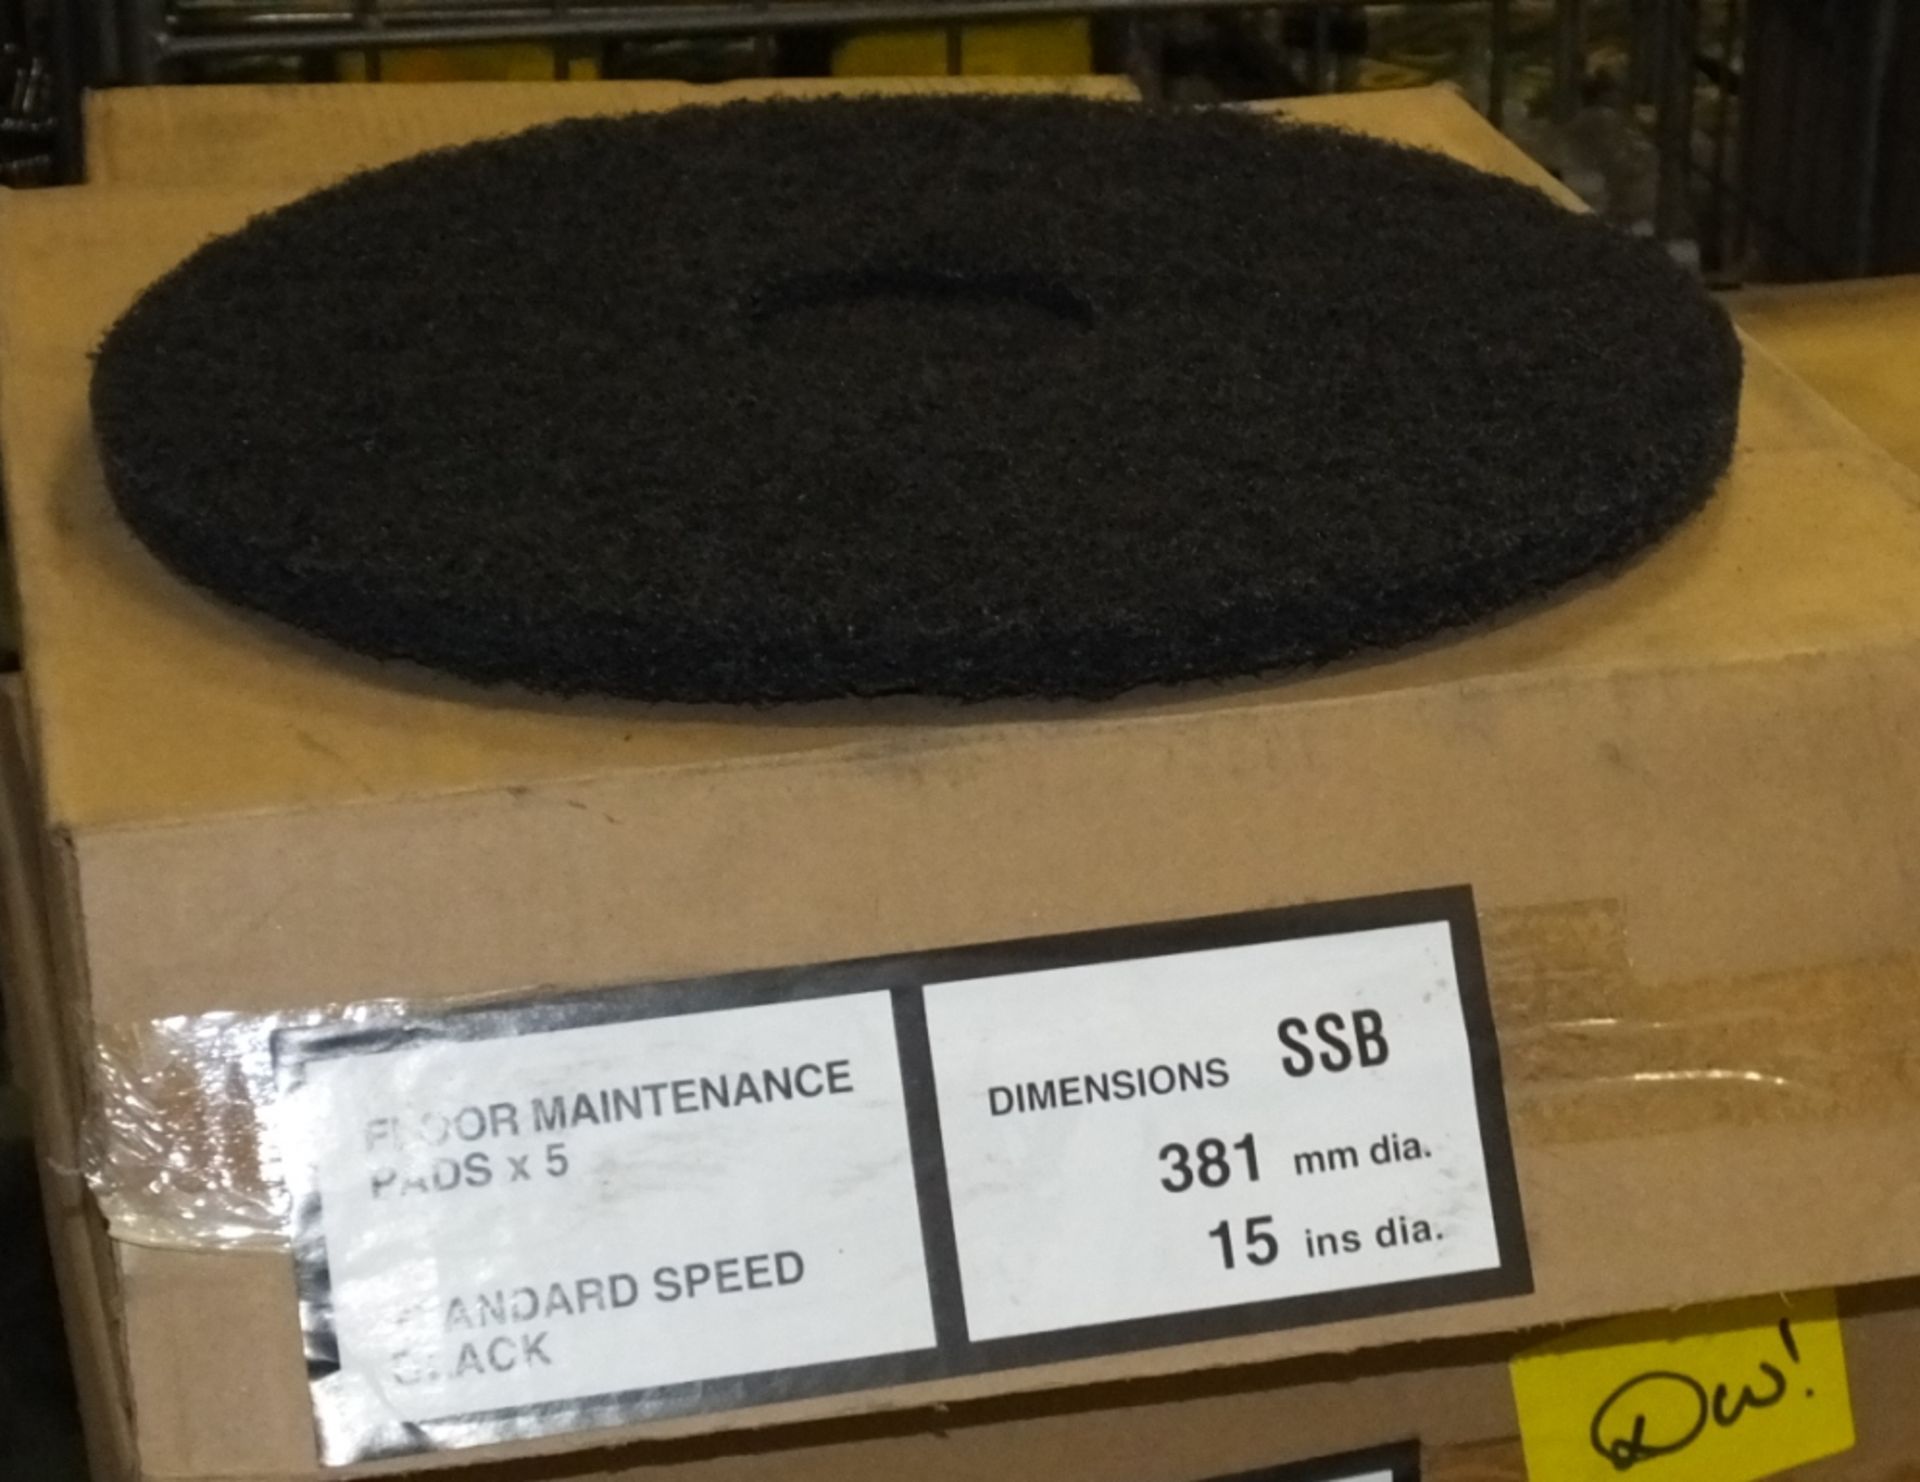 Floor Maintenance pads - Black - 5 per box - 28 boxes - Image 3 of 3